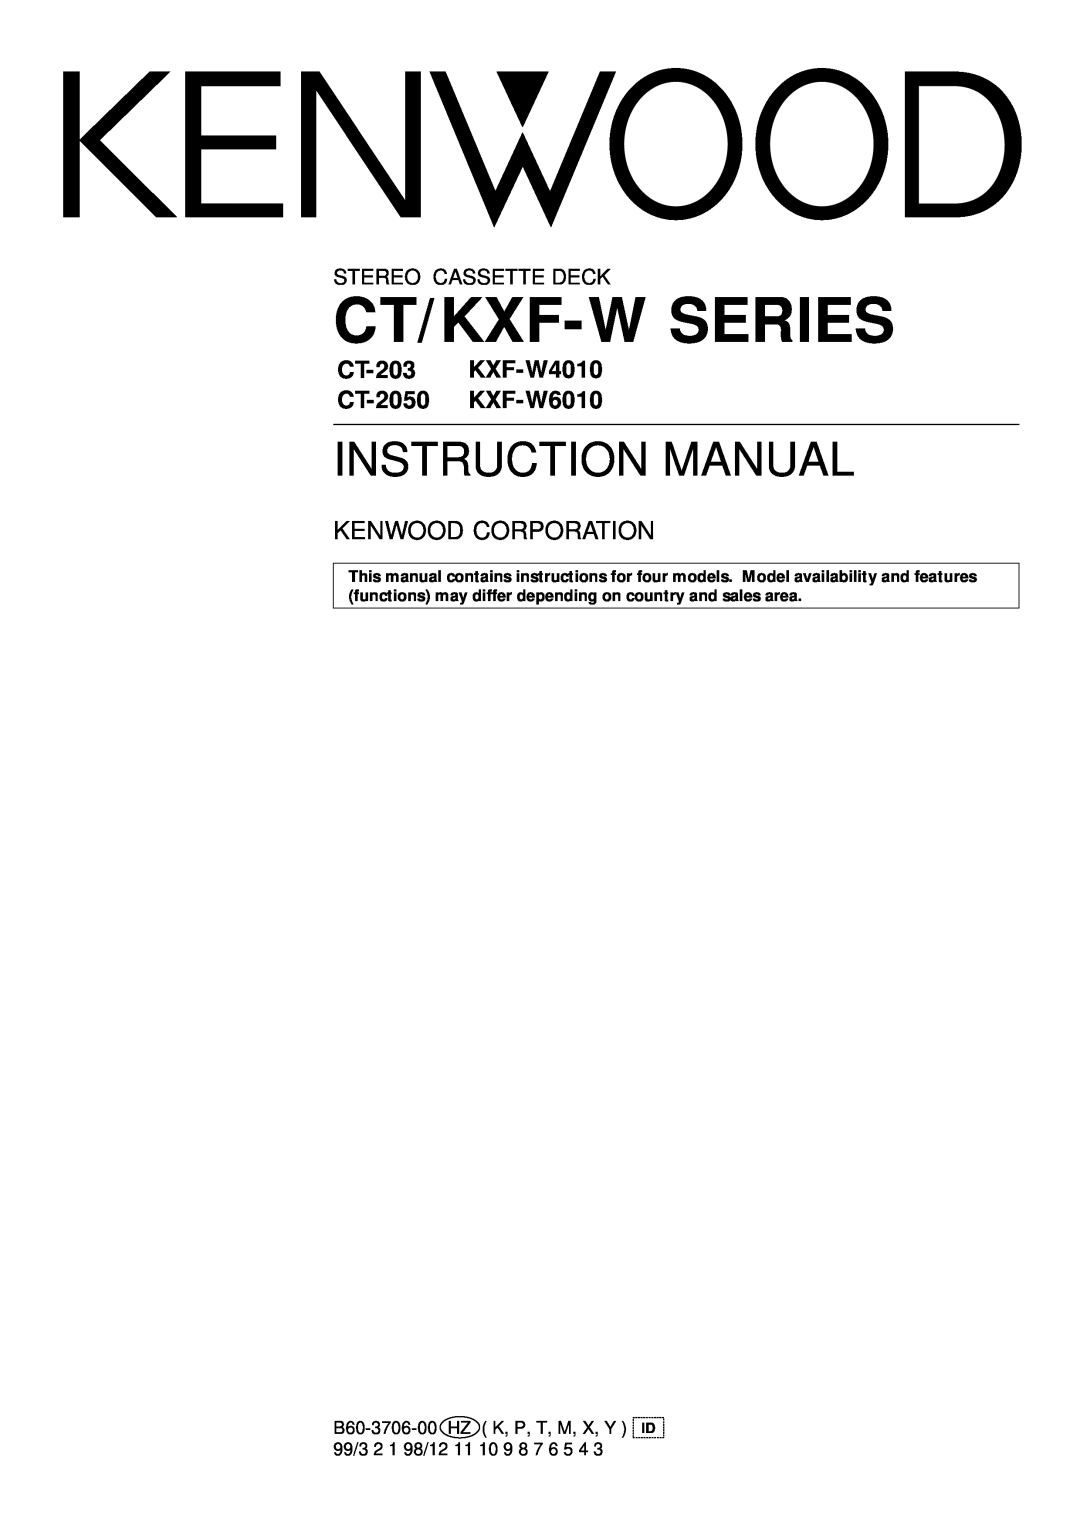 Kenwood CT/KXF-W instruction manual CT-203 KXF-W4010 CT-2050 KXF-W6010, Ct/Kxf-W Series, Kenwood Corporation 